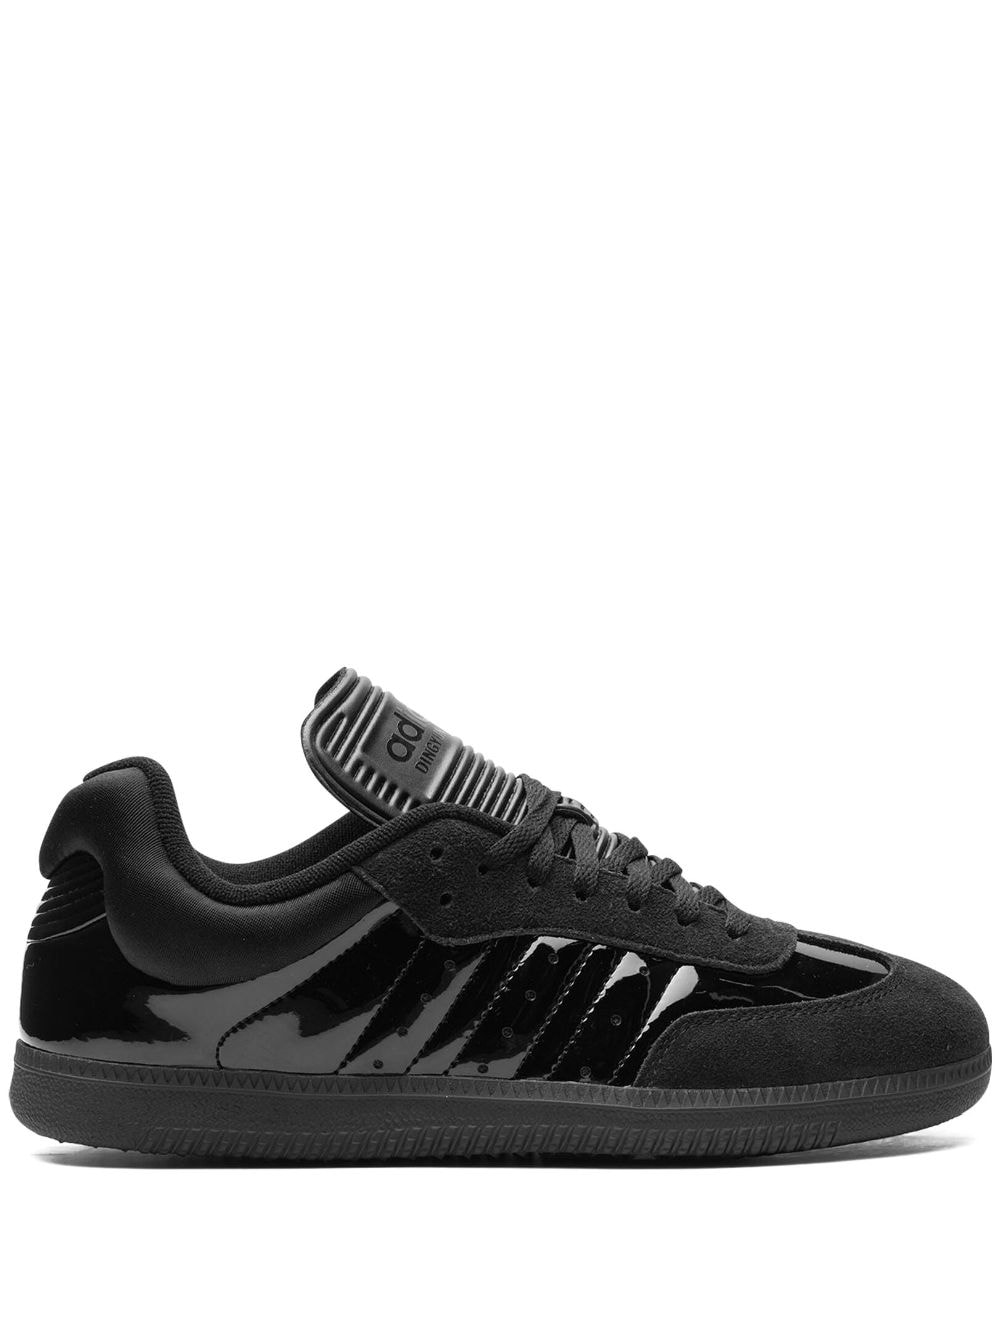 Adidas Originals X Dingyun Zhang Samba Leather Sneakers In Black